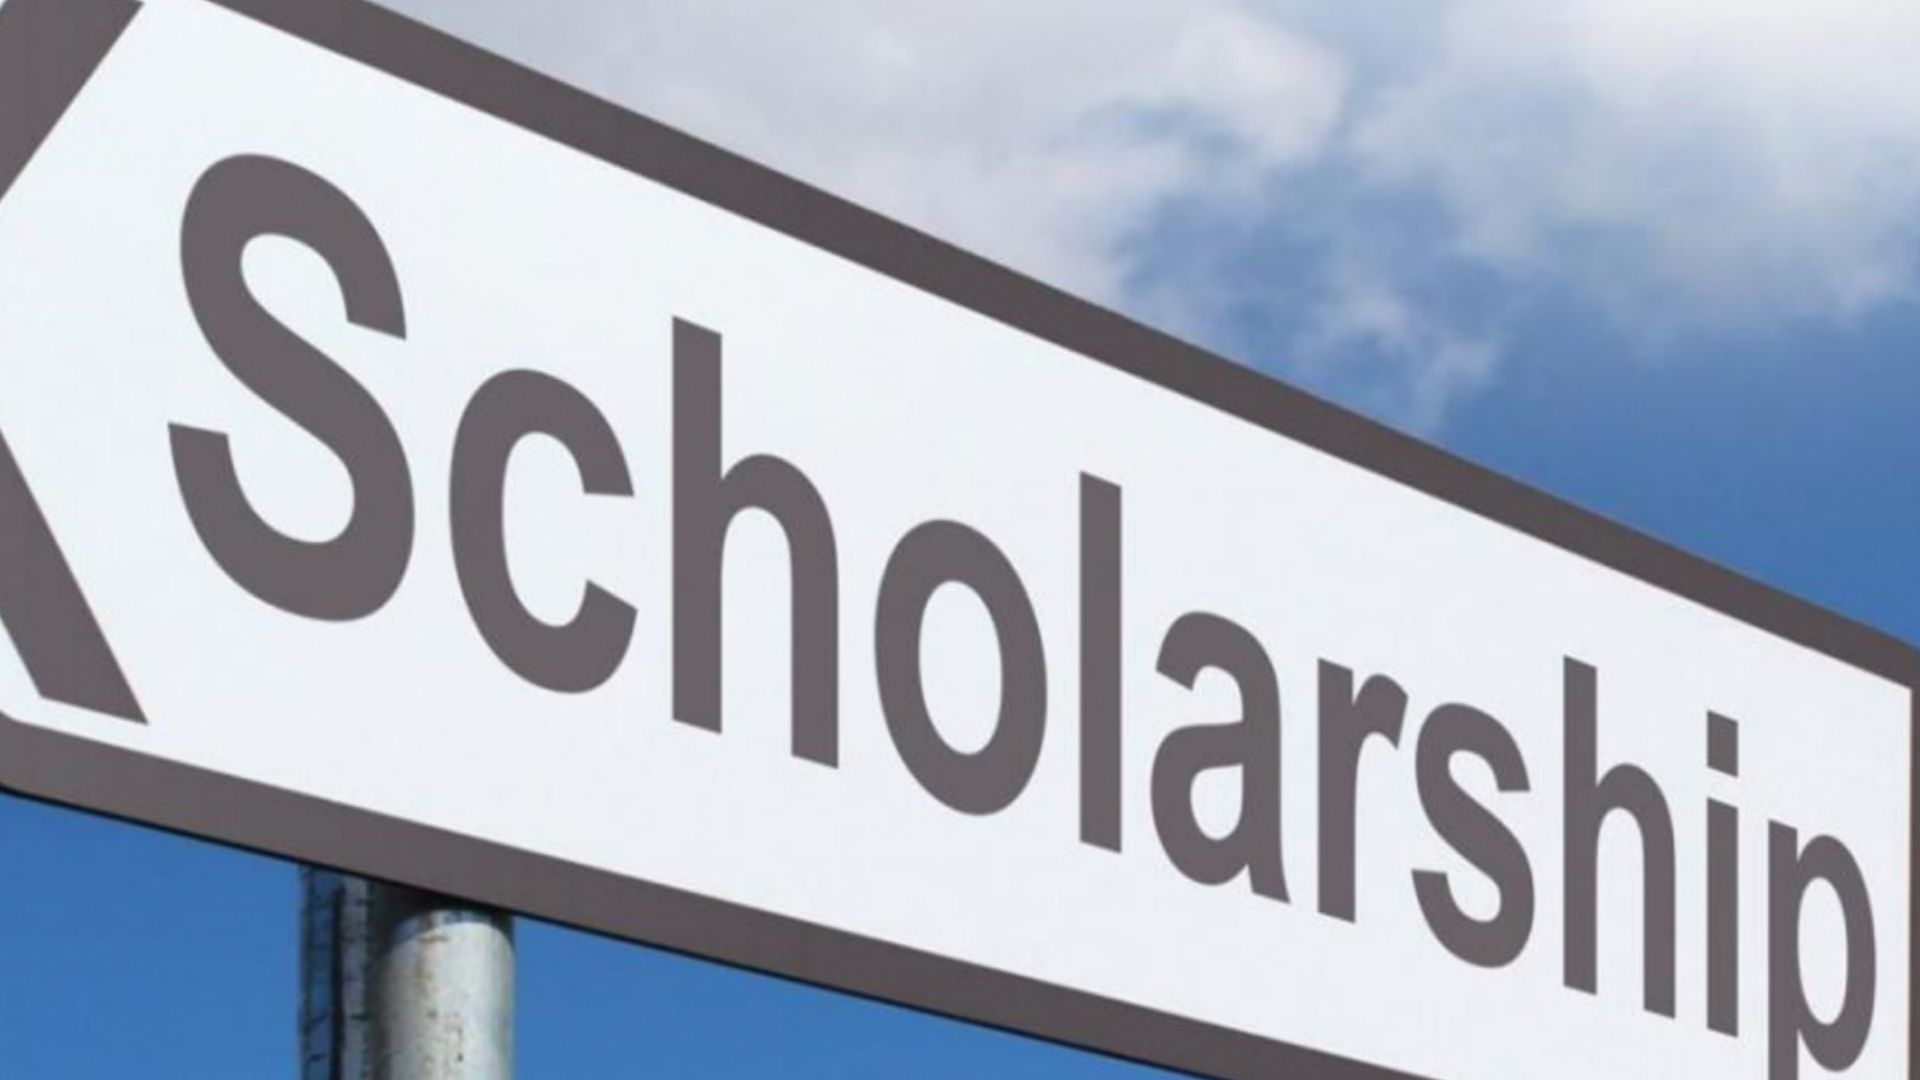 phd scholarships france